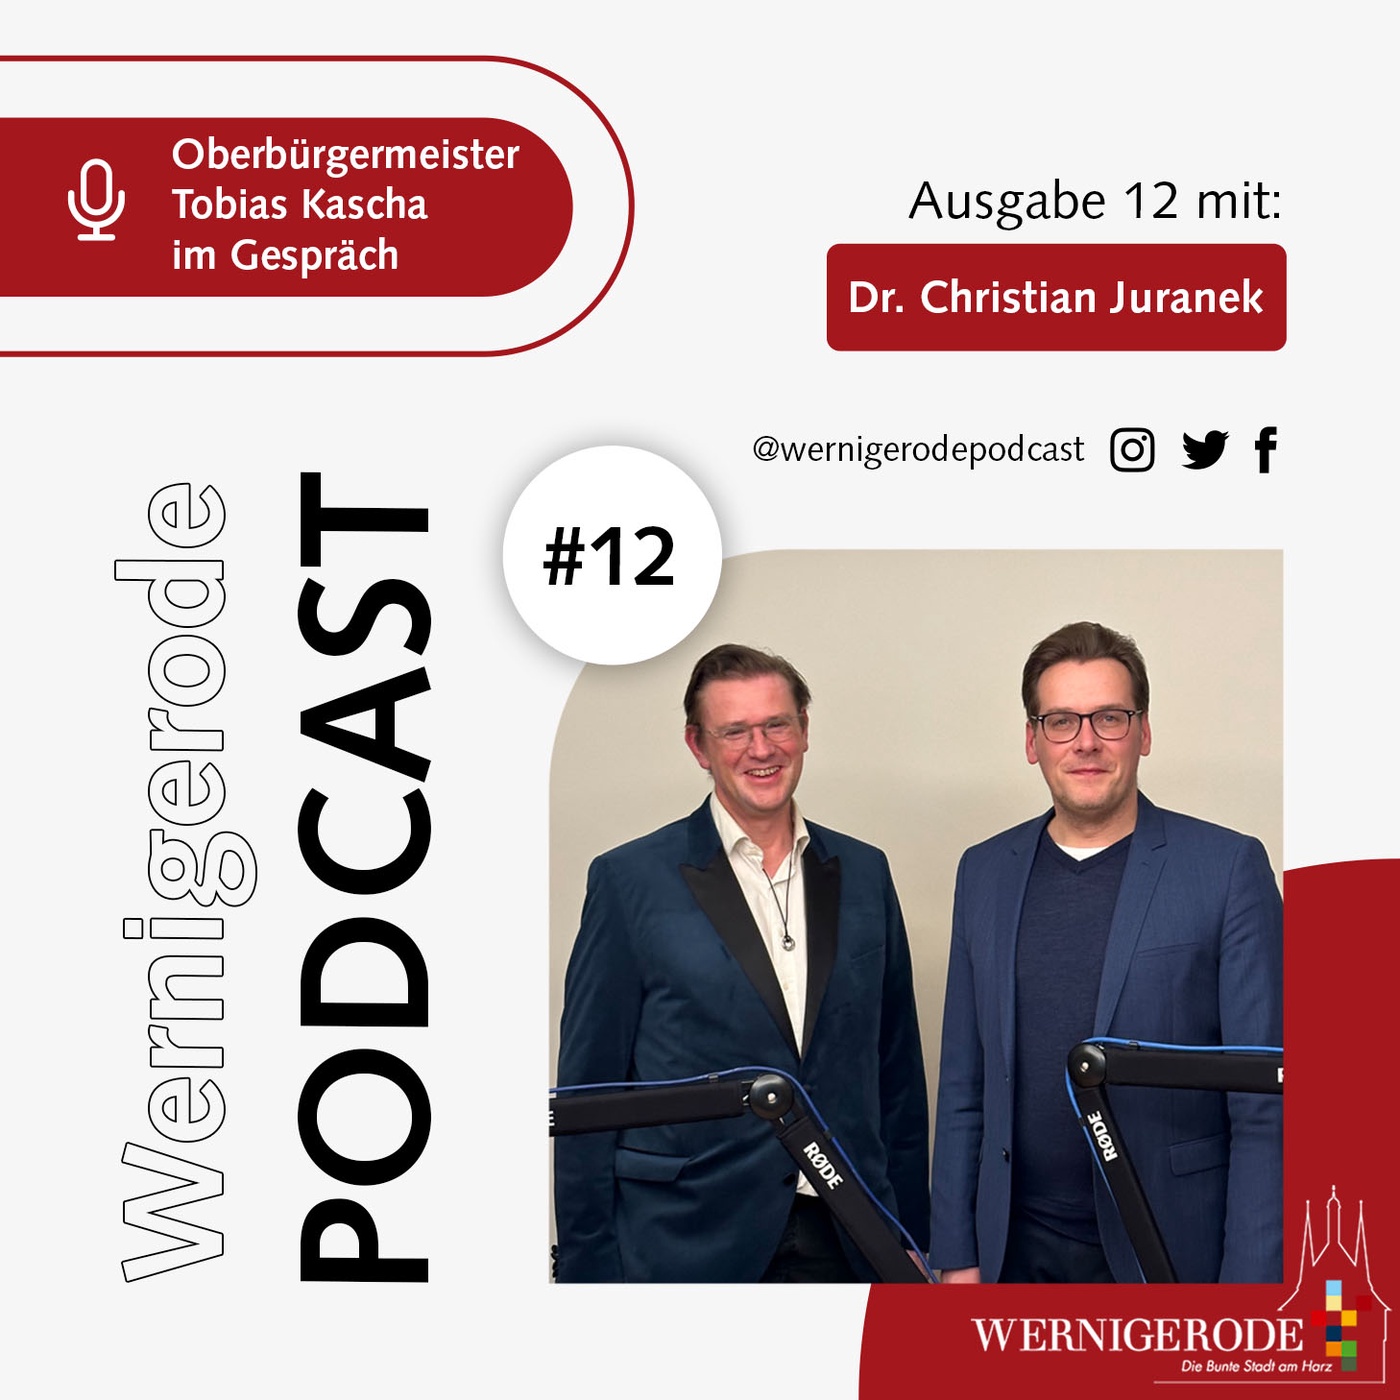 Wernigerode Podcast #12 - Oberbürgermeister Tobias Kascha im Gespräch #12 mit Dr. Christian Juranek.